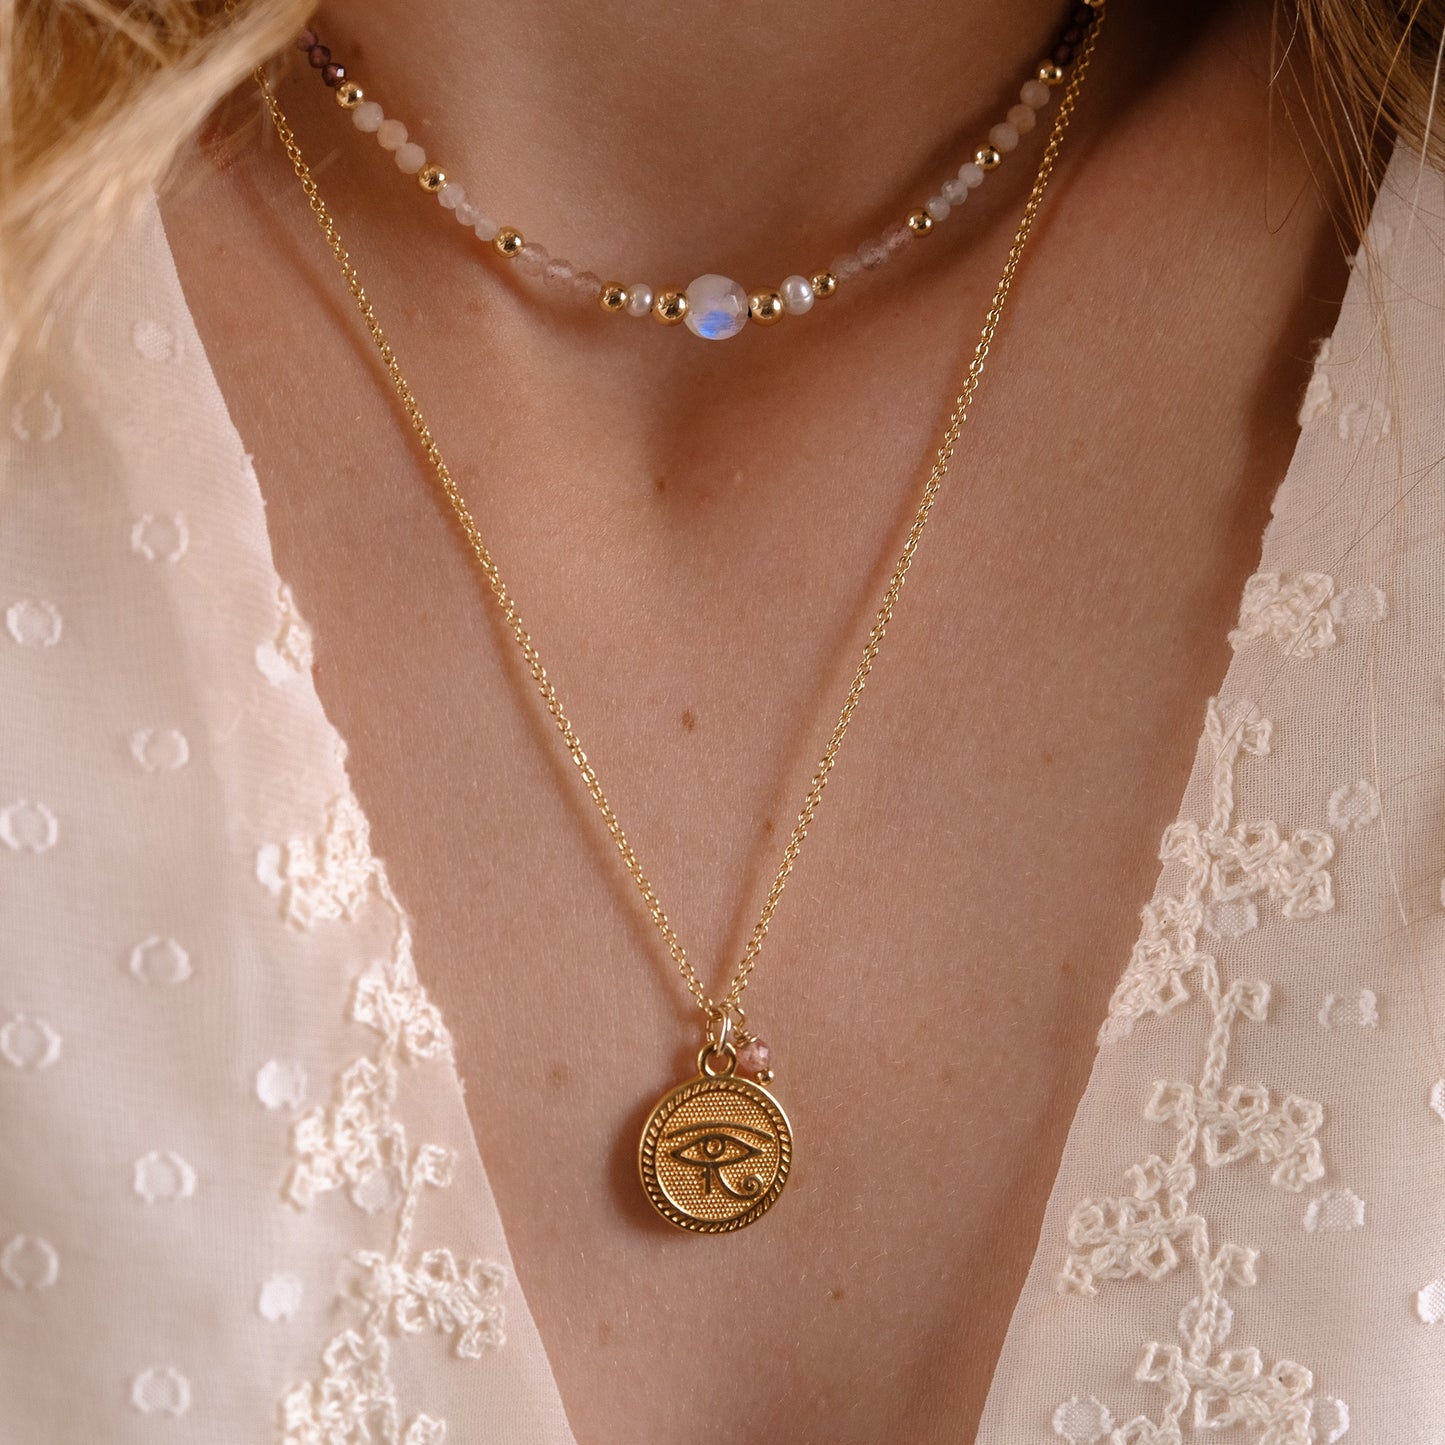 “Ground” necklace